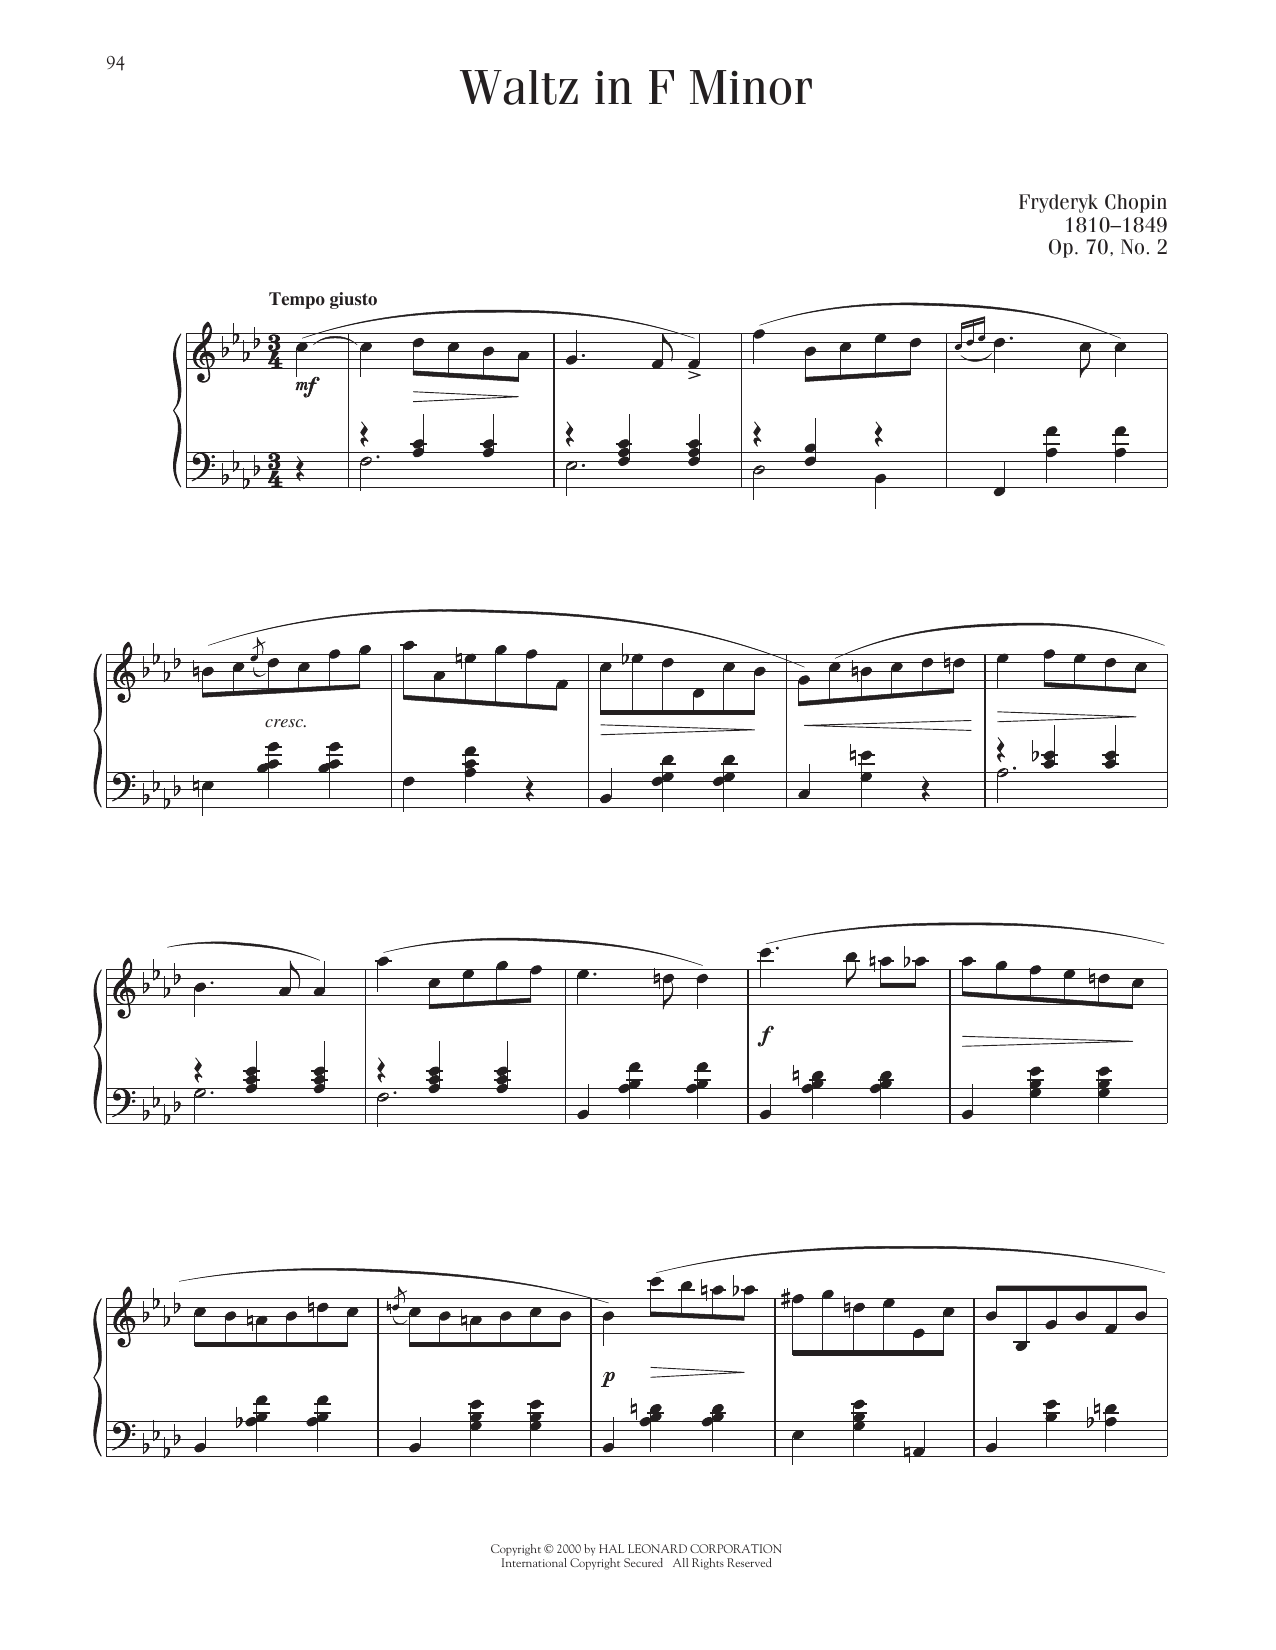 Frederic Chopin Waltz, Op. 70, No. 2 sheet music notes printable PDF score